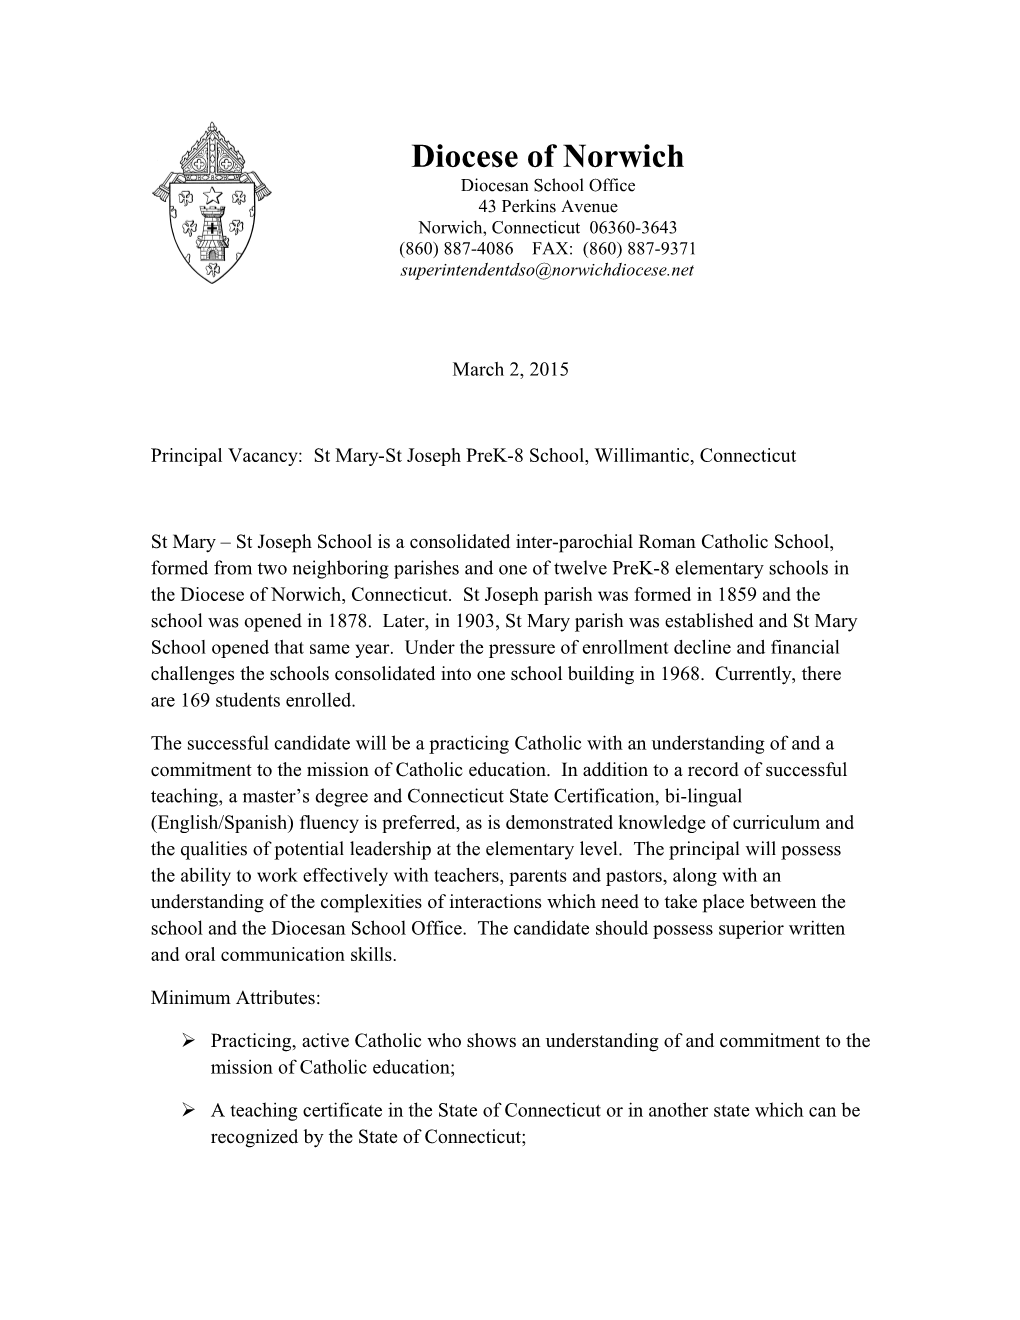 Principal Vacancy: St Mary-St Joseph Prek-8 School, Willimantic, Connecticut